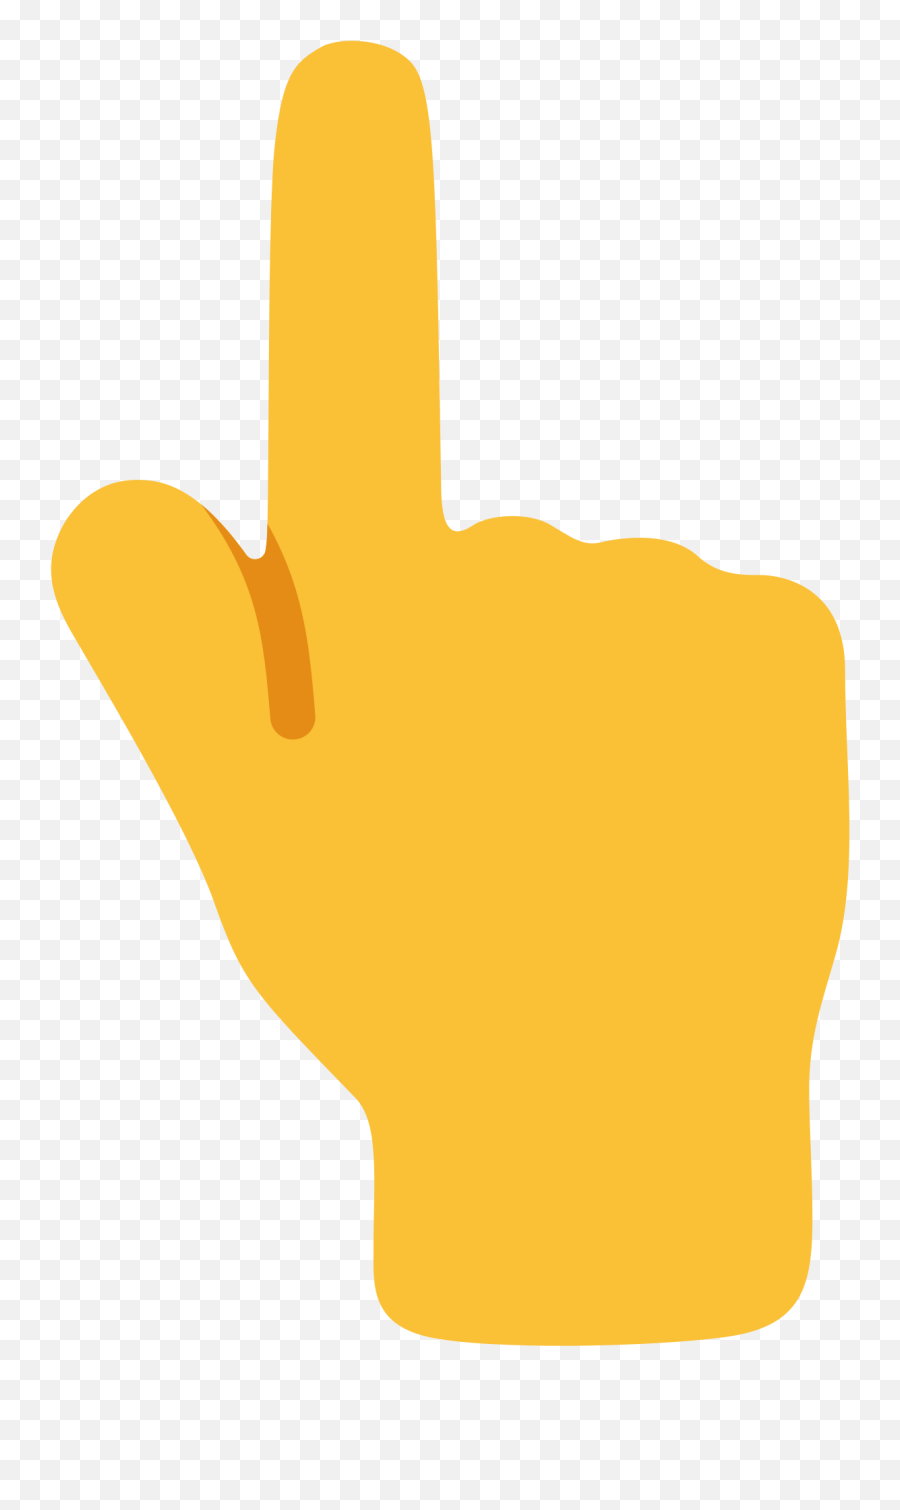 Thumb Up Emoji Transparent Png Clipart Free Download - Emoji Finger,Hand Emoji Png